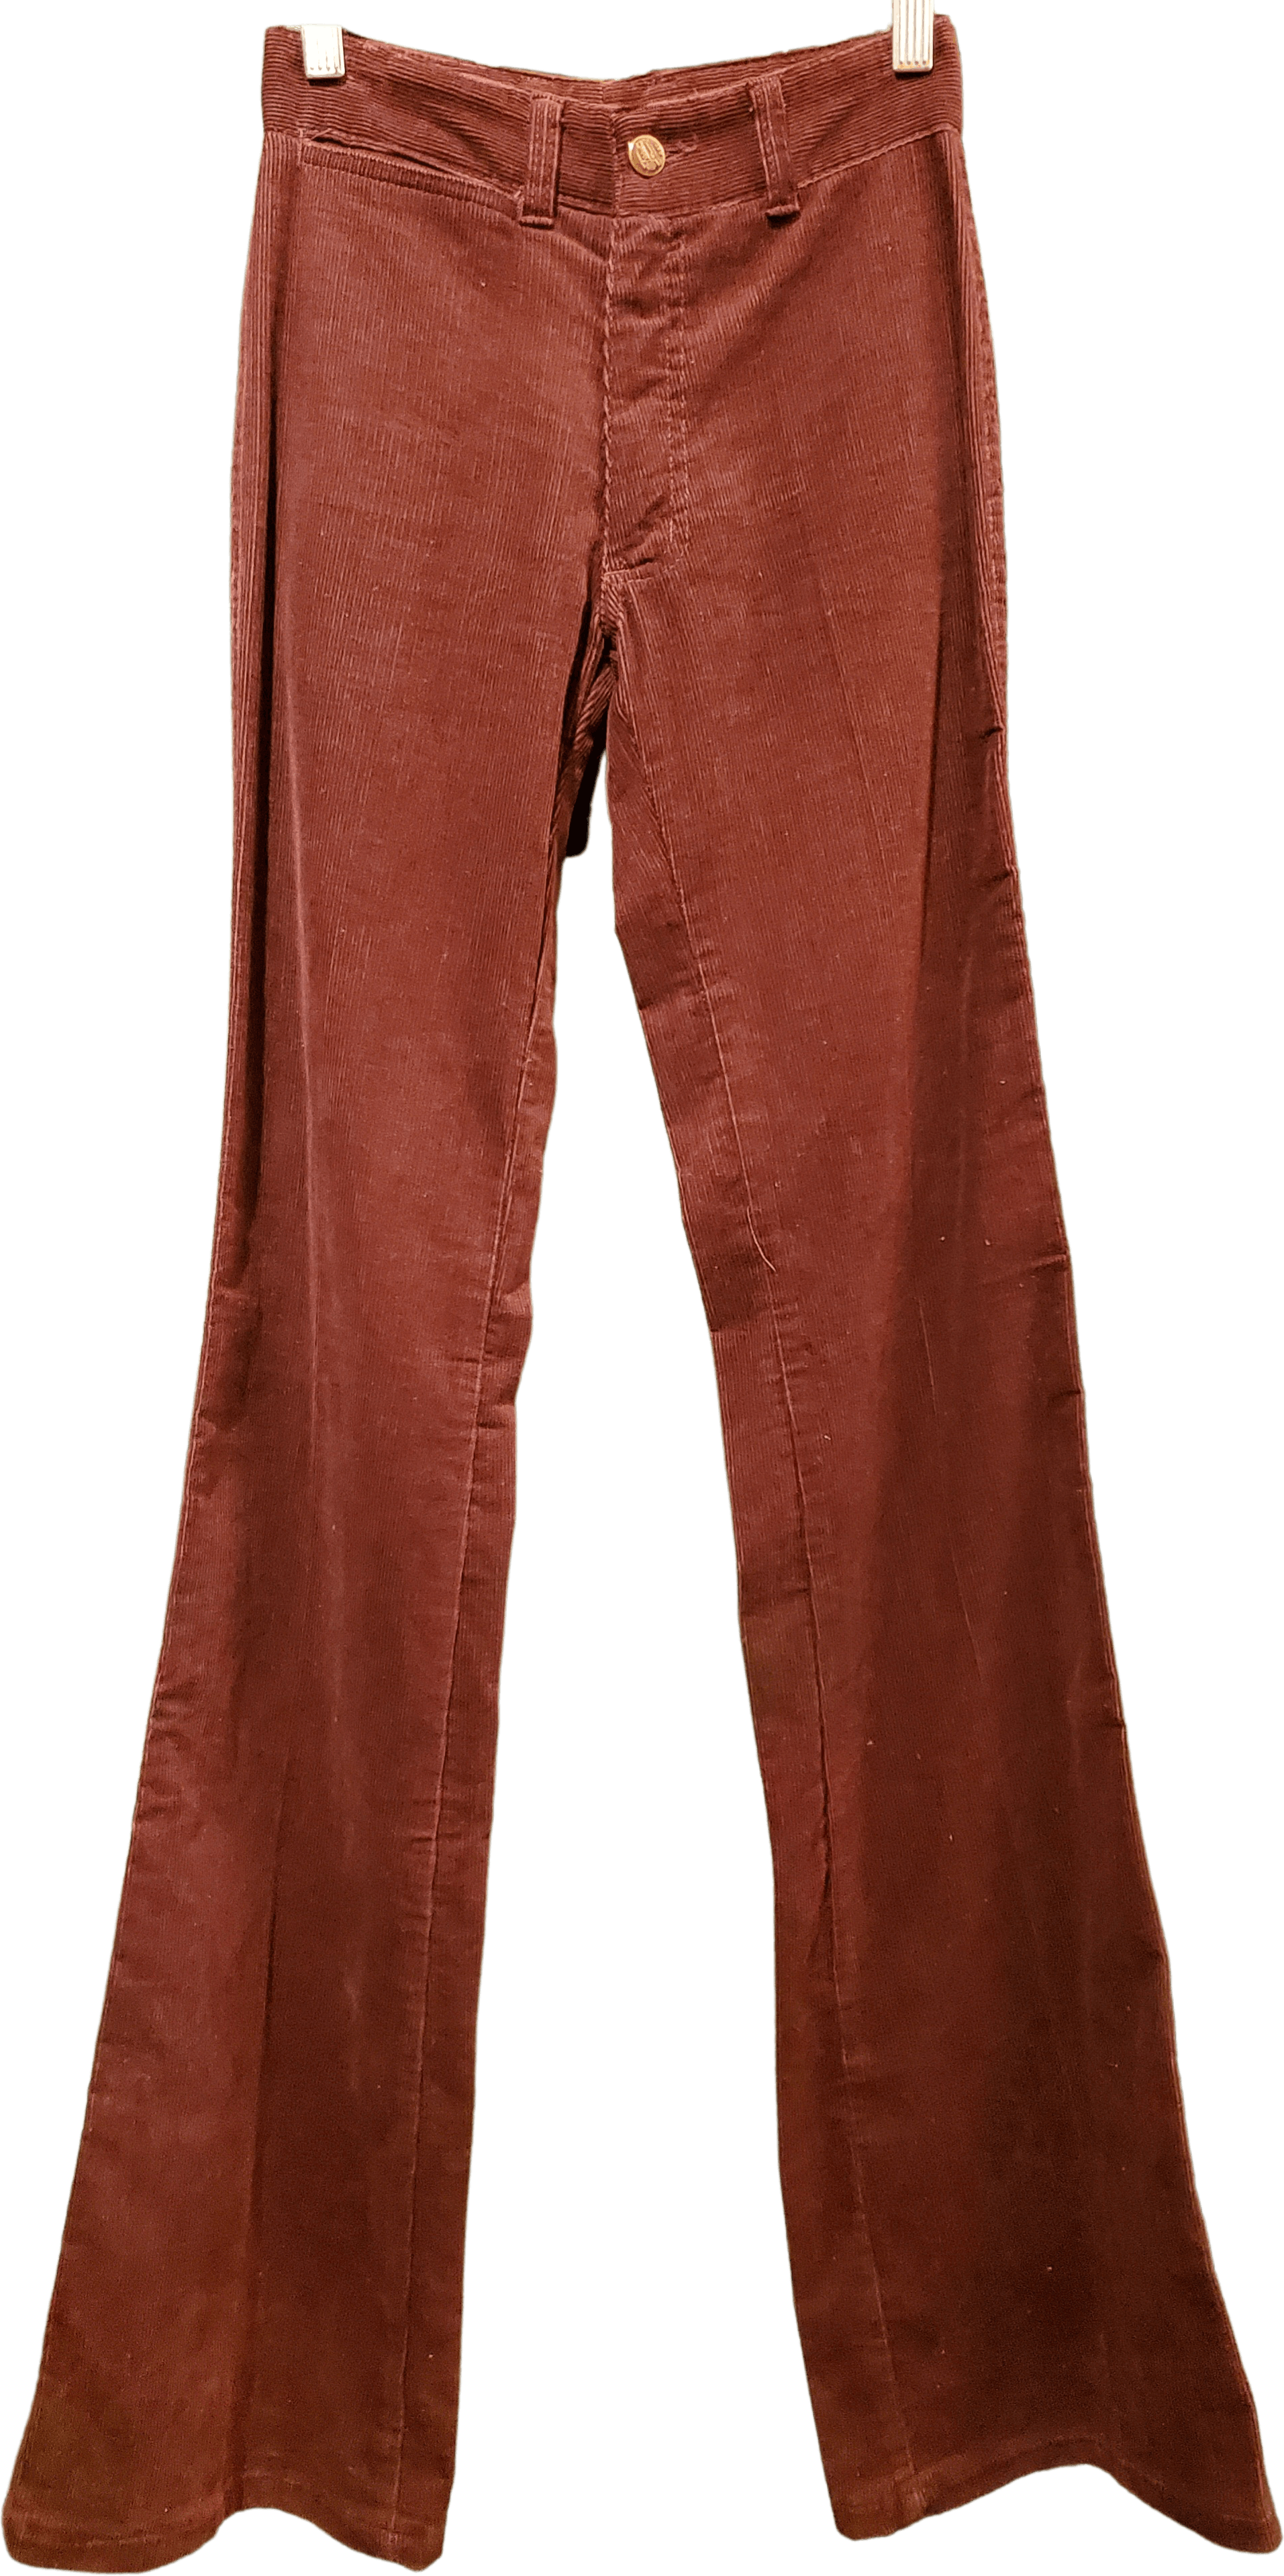 Vintage 70's/80's Brown Corduroy High Waist Flair Pants by Chemin De Fer